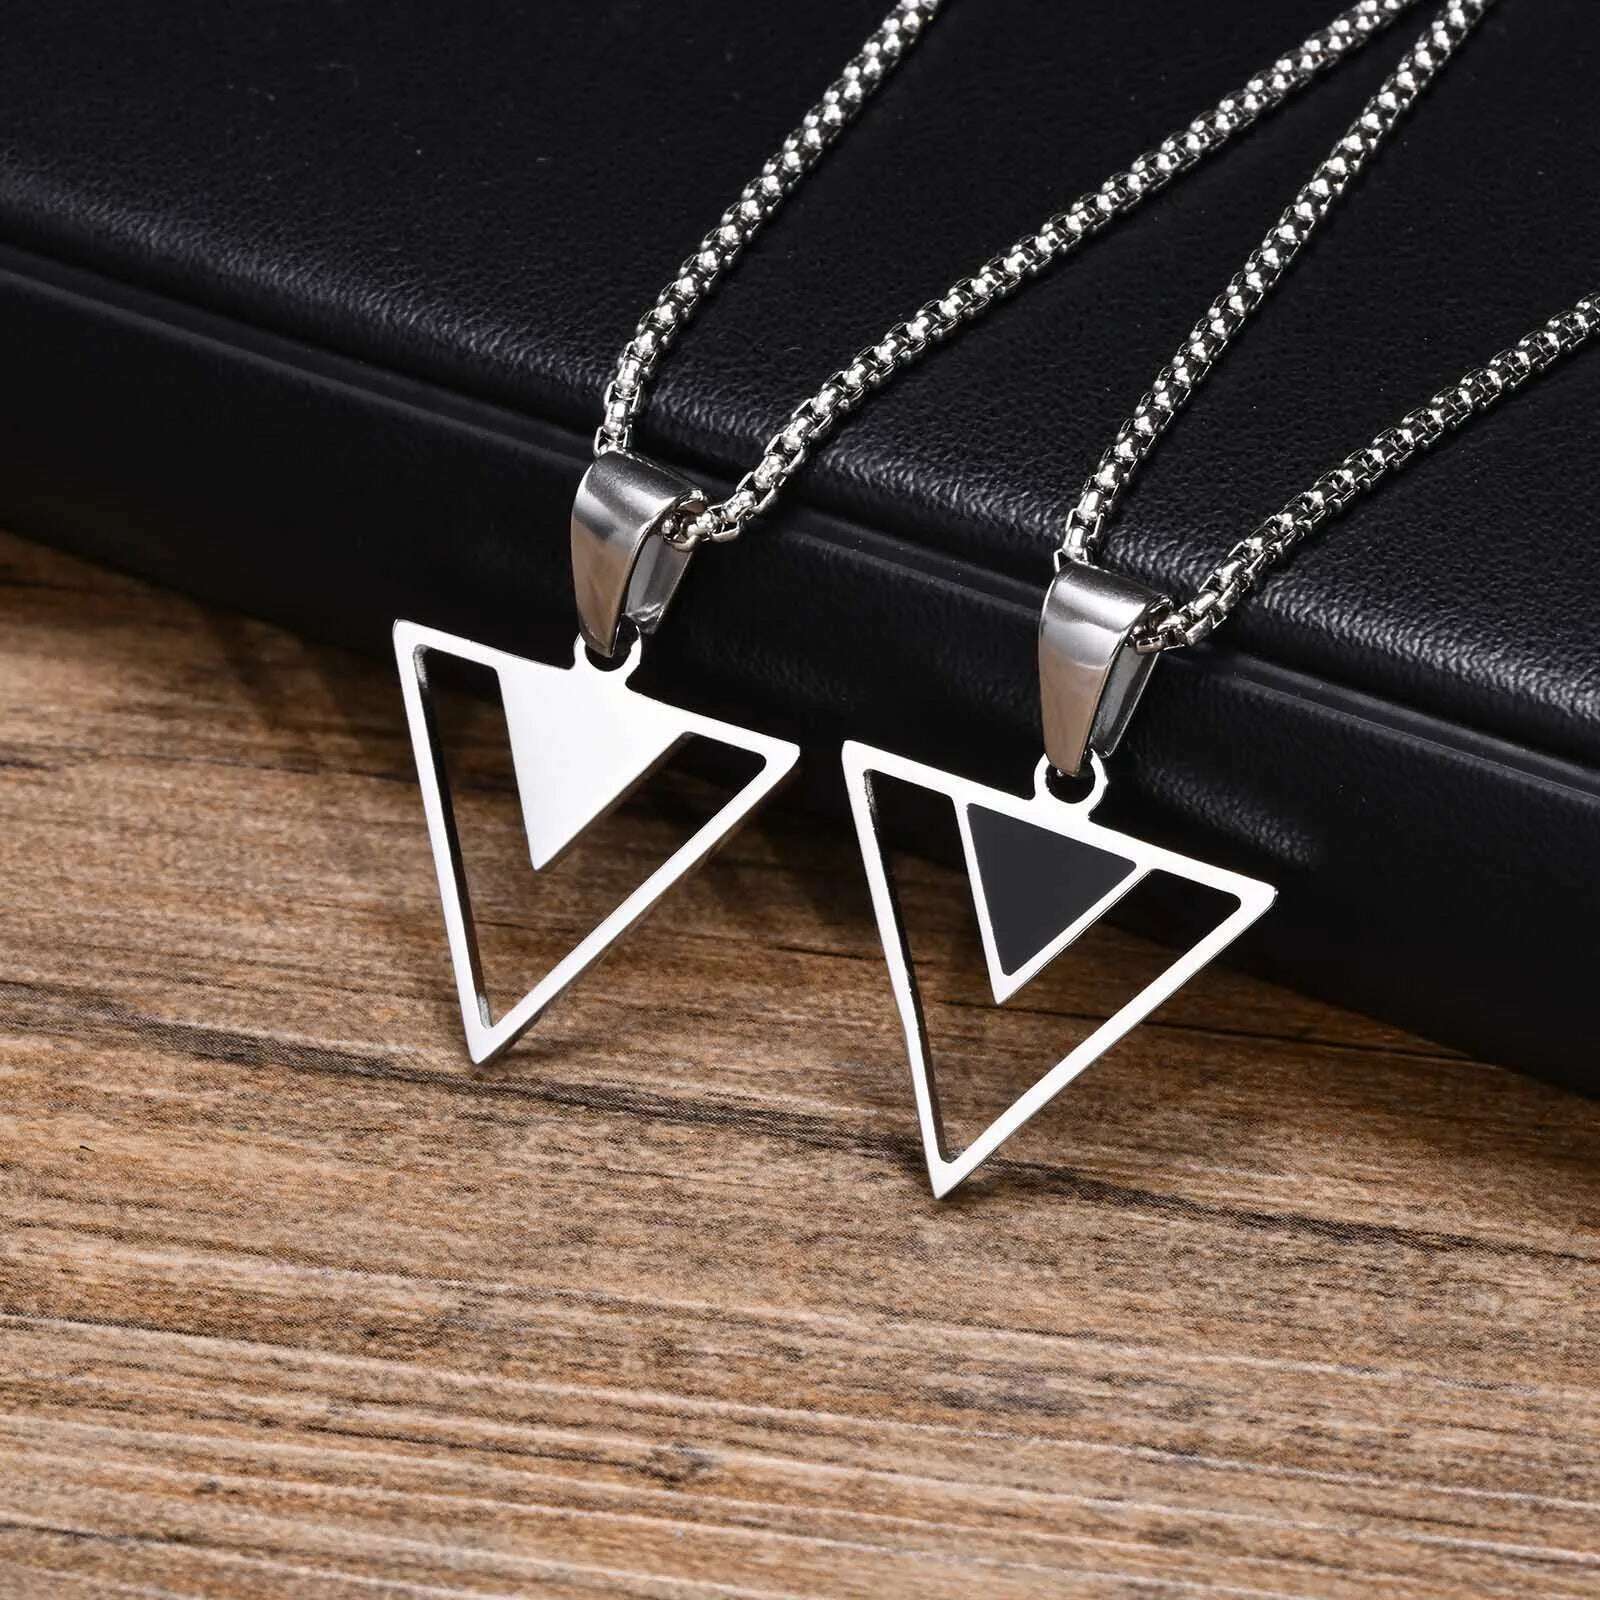 KIMLUD, Vnox New Fashion Triangle Pendant Necklace for Men Boys, Minimalist Stainless Steel Hollow Geometric Collar Male Jewelry Gift, PN-1835S / 70cm, KIMLUD Women's Clothes